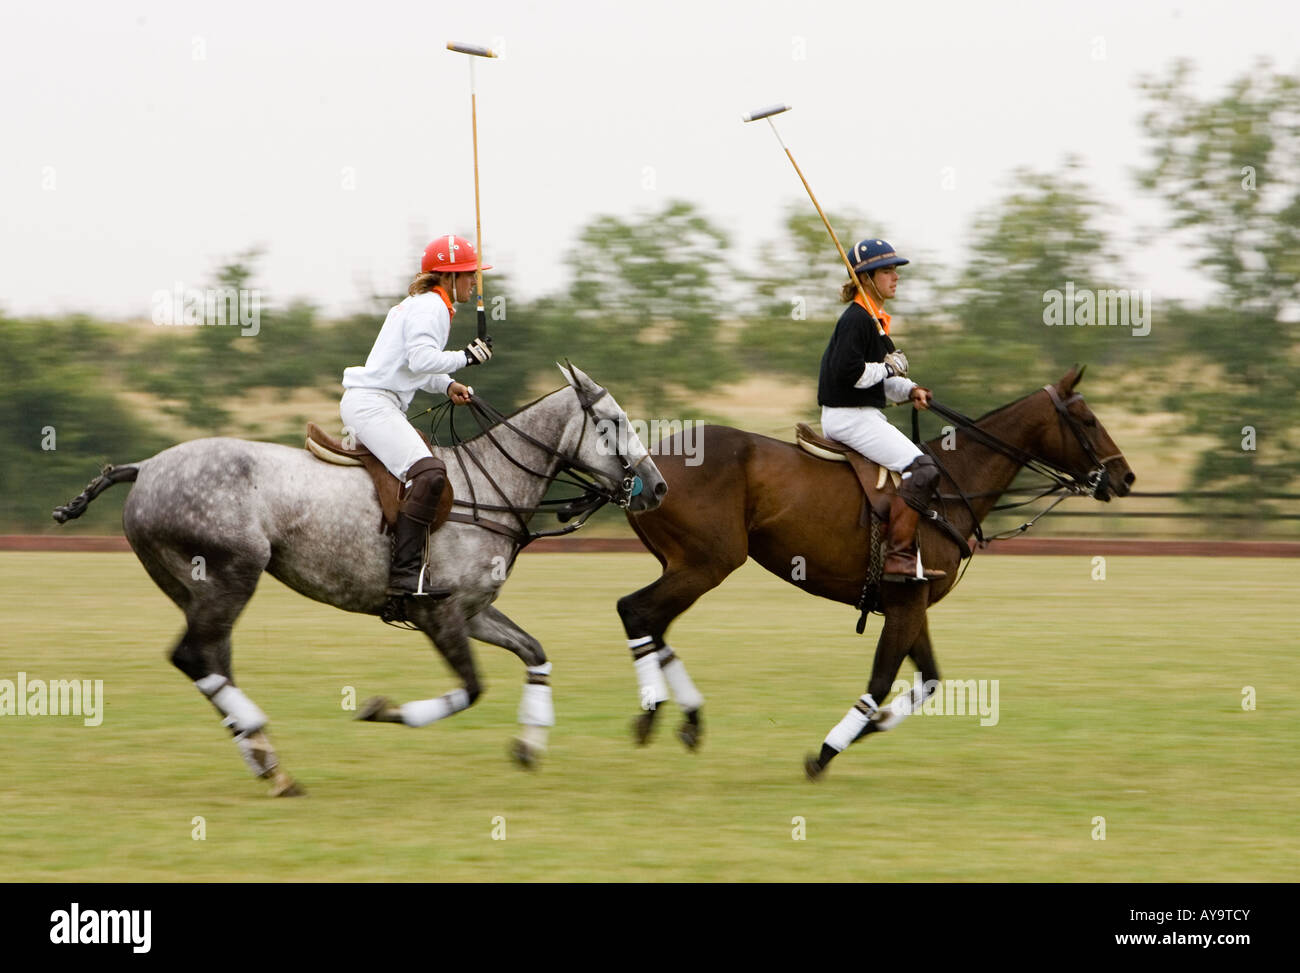 Polo players on horseback action Stock Photo